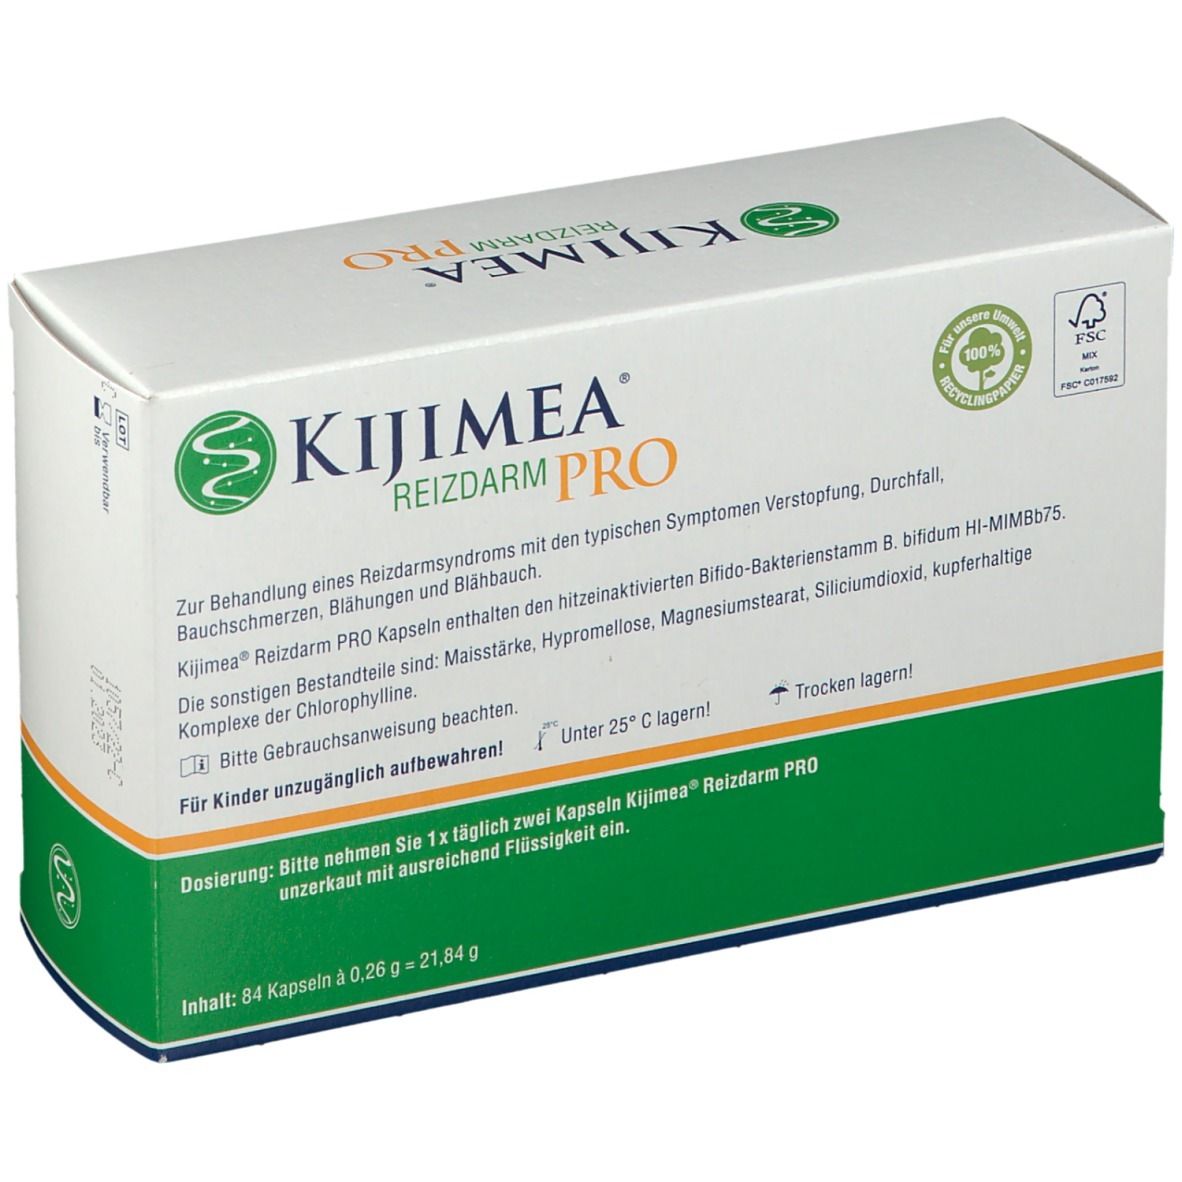 Kijimea® Reizdarm PRO  Produkte von den Mikrobiomexperten